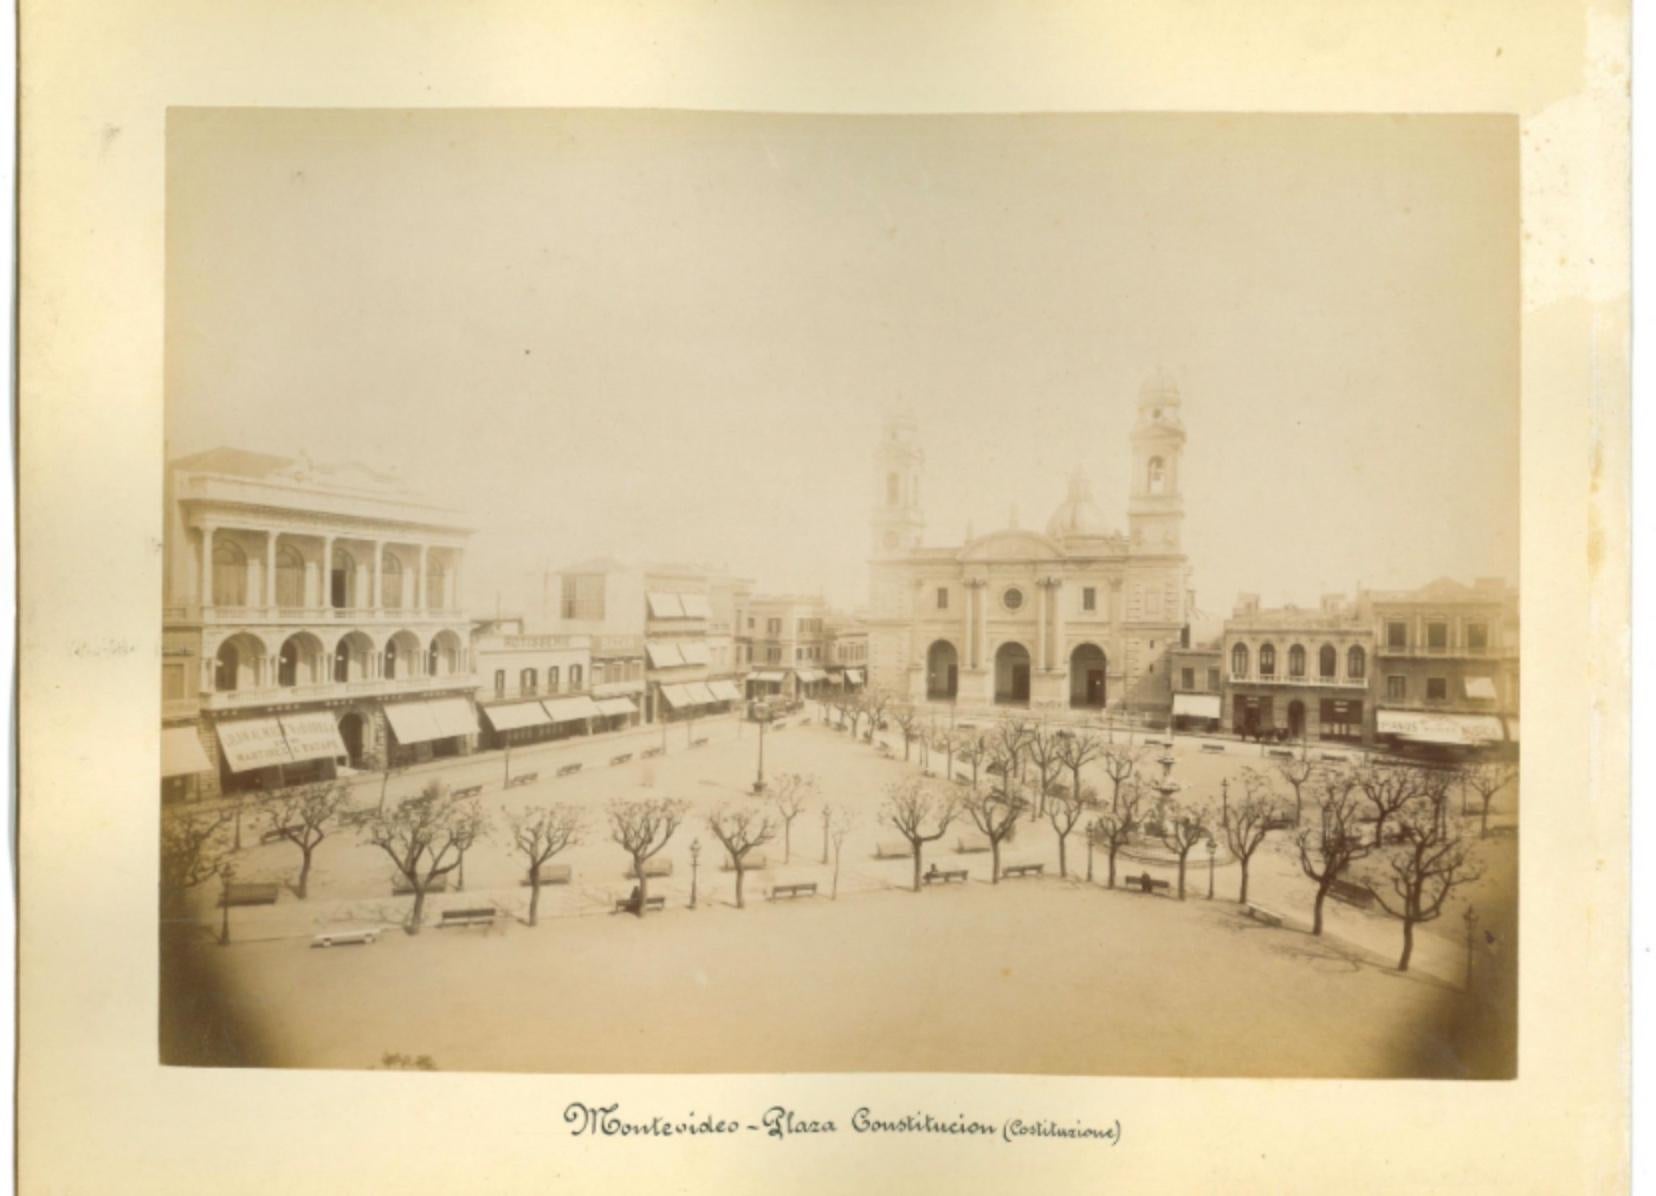 Unknown Landscape Photograph - Ancient Views of Montevideo, Uruguay - Original Vintage Photo - 1880s